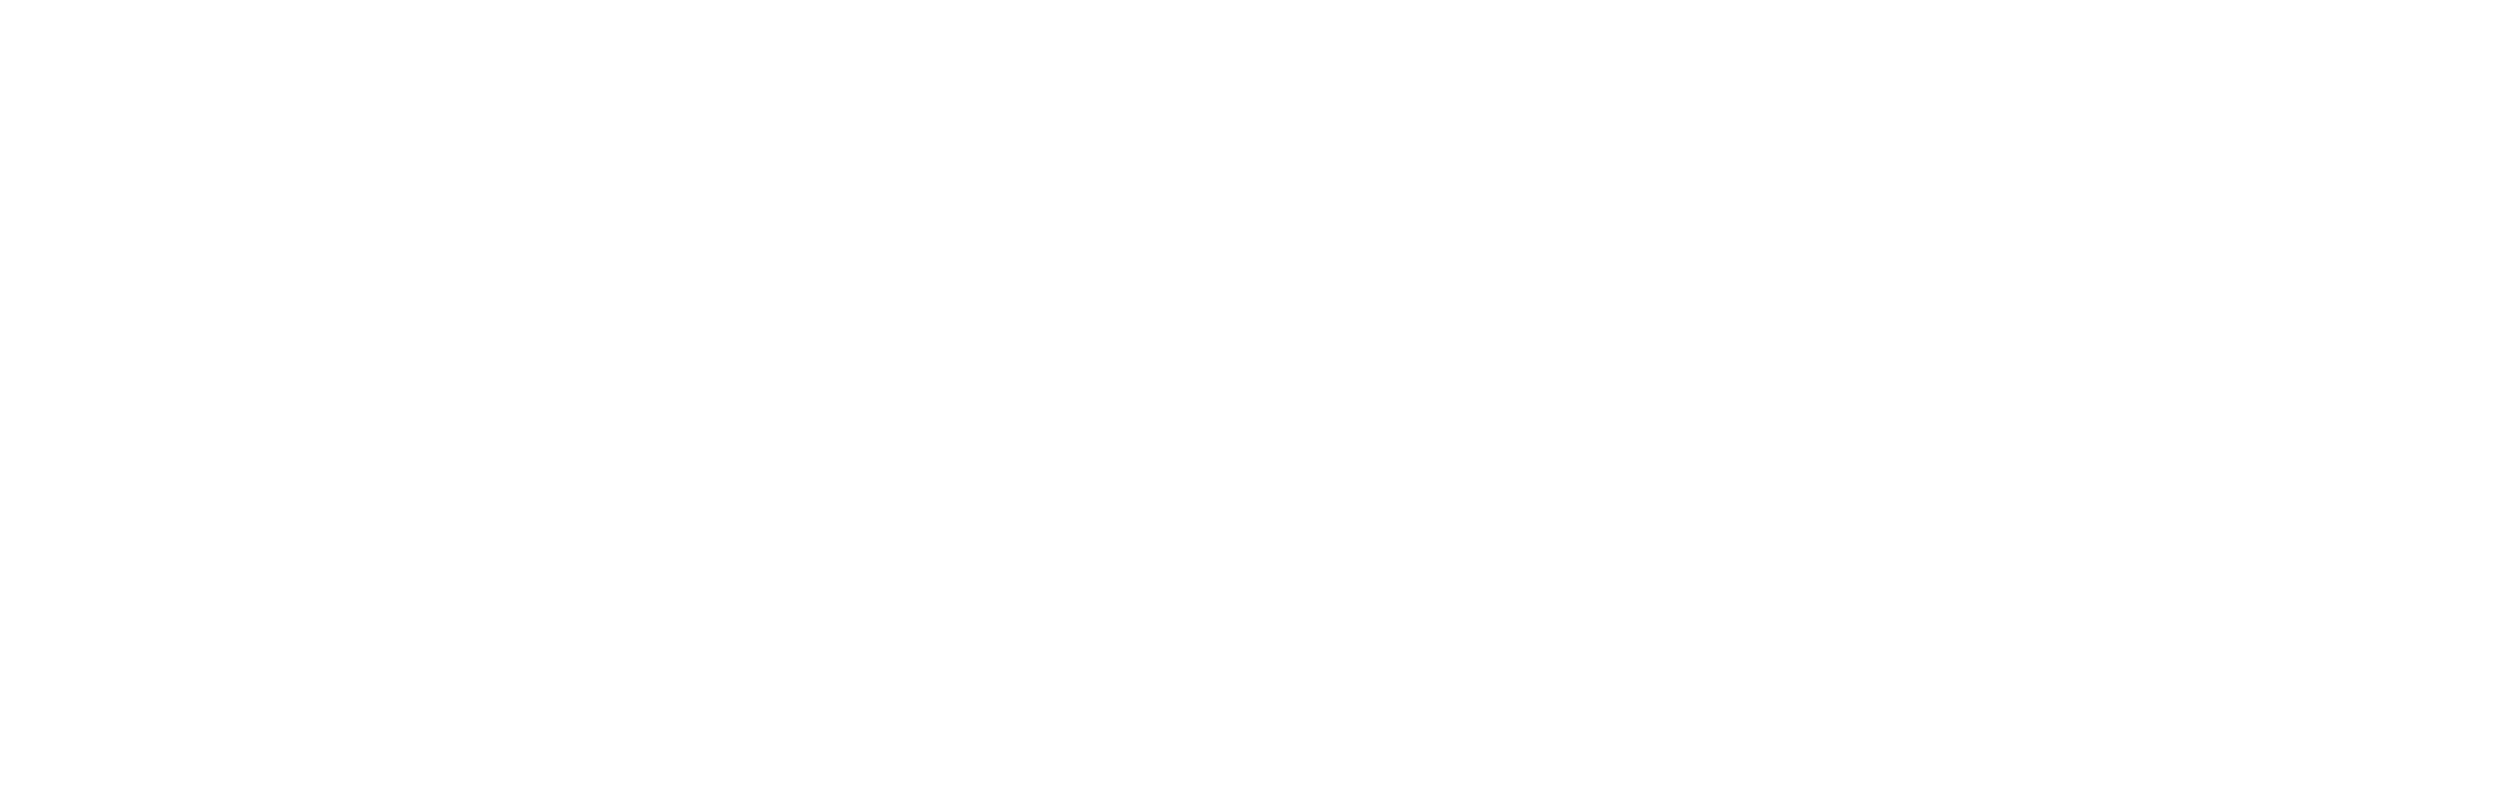 Fort Bend Coffee Roasters